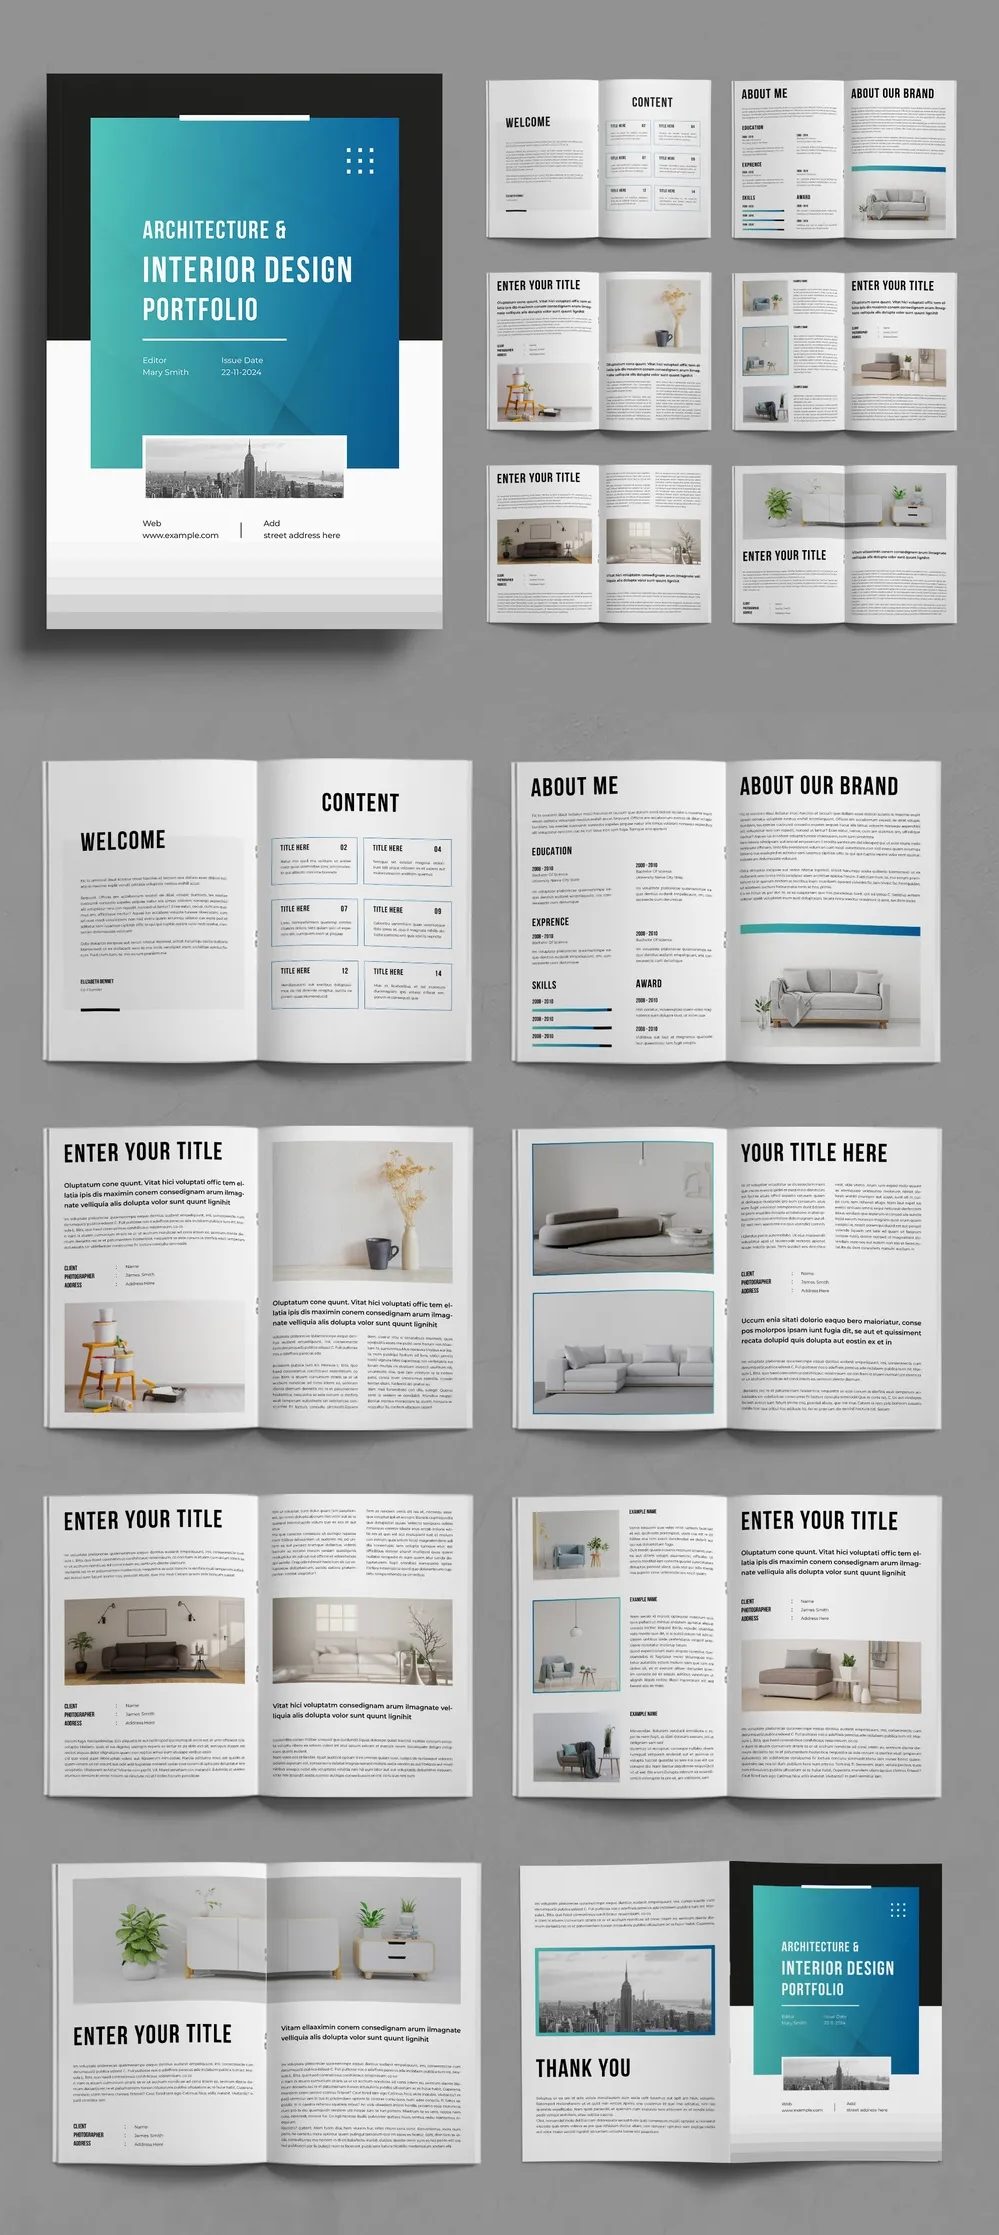 Adobestock - Architecture And Interior Design Magazine Layout 721819480